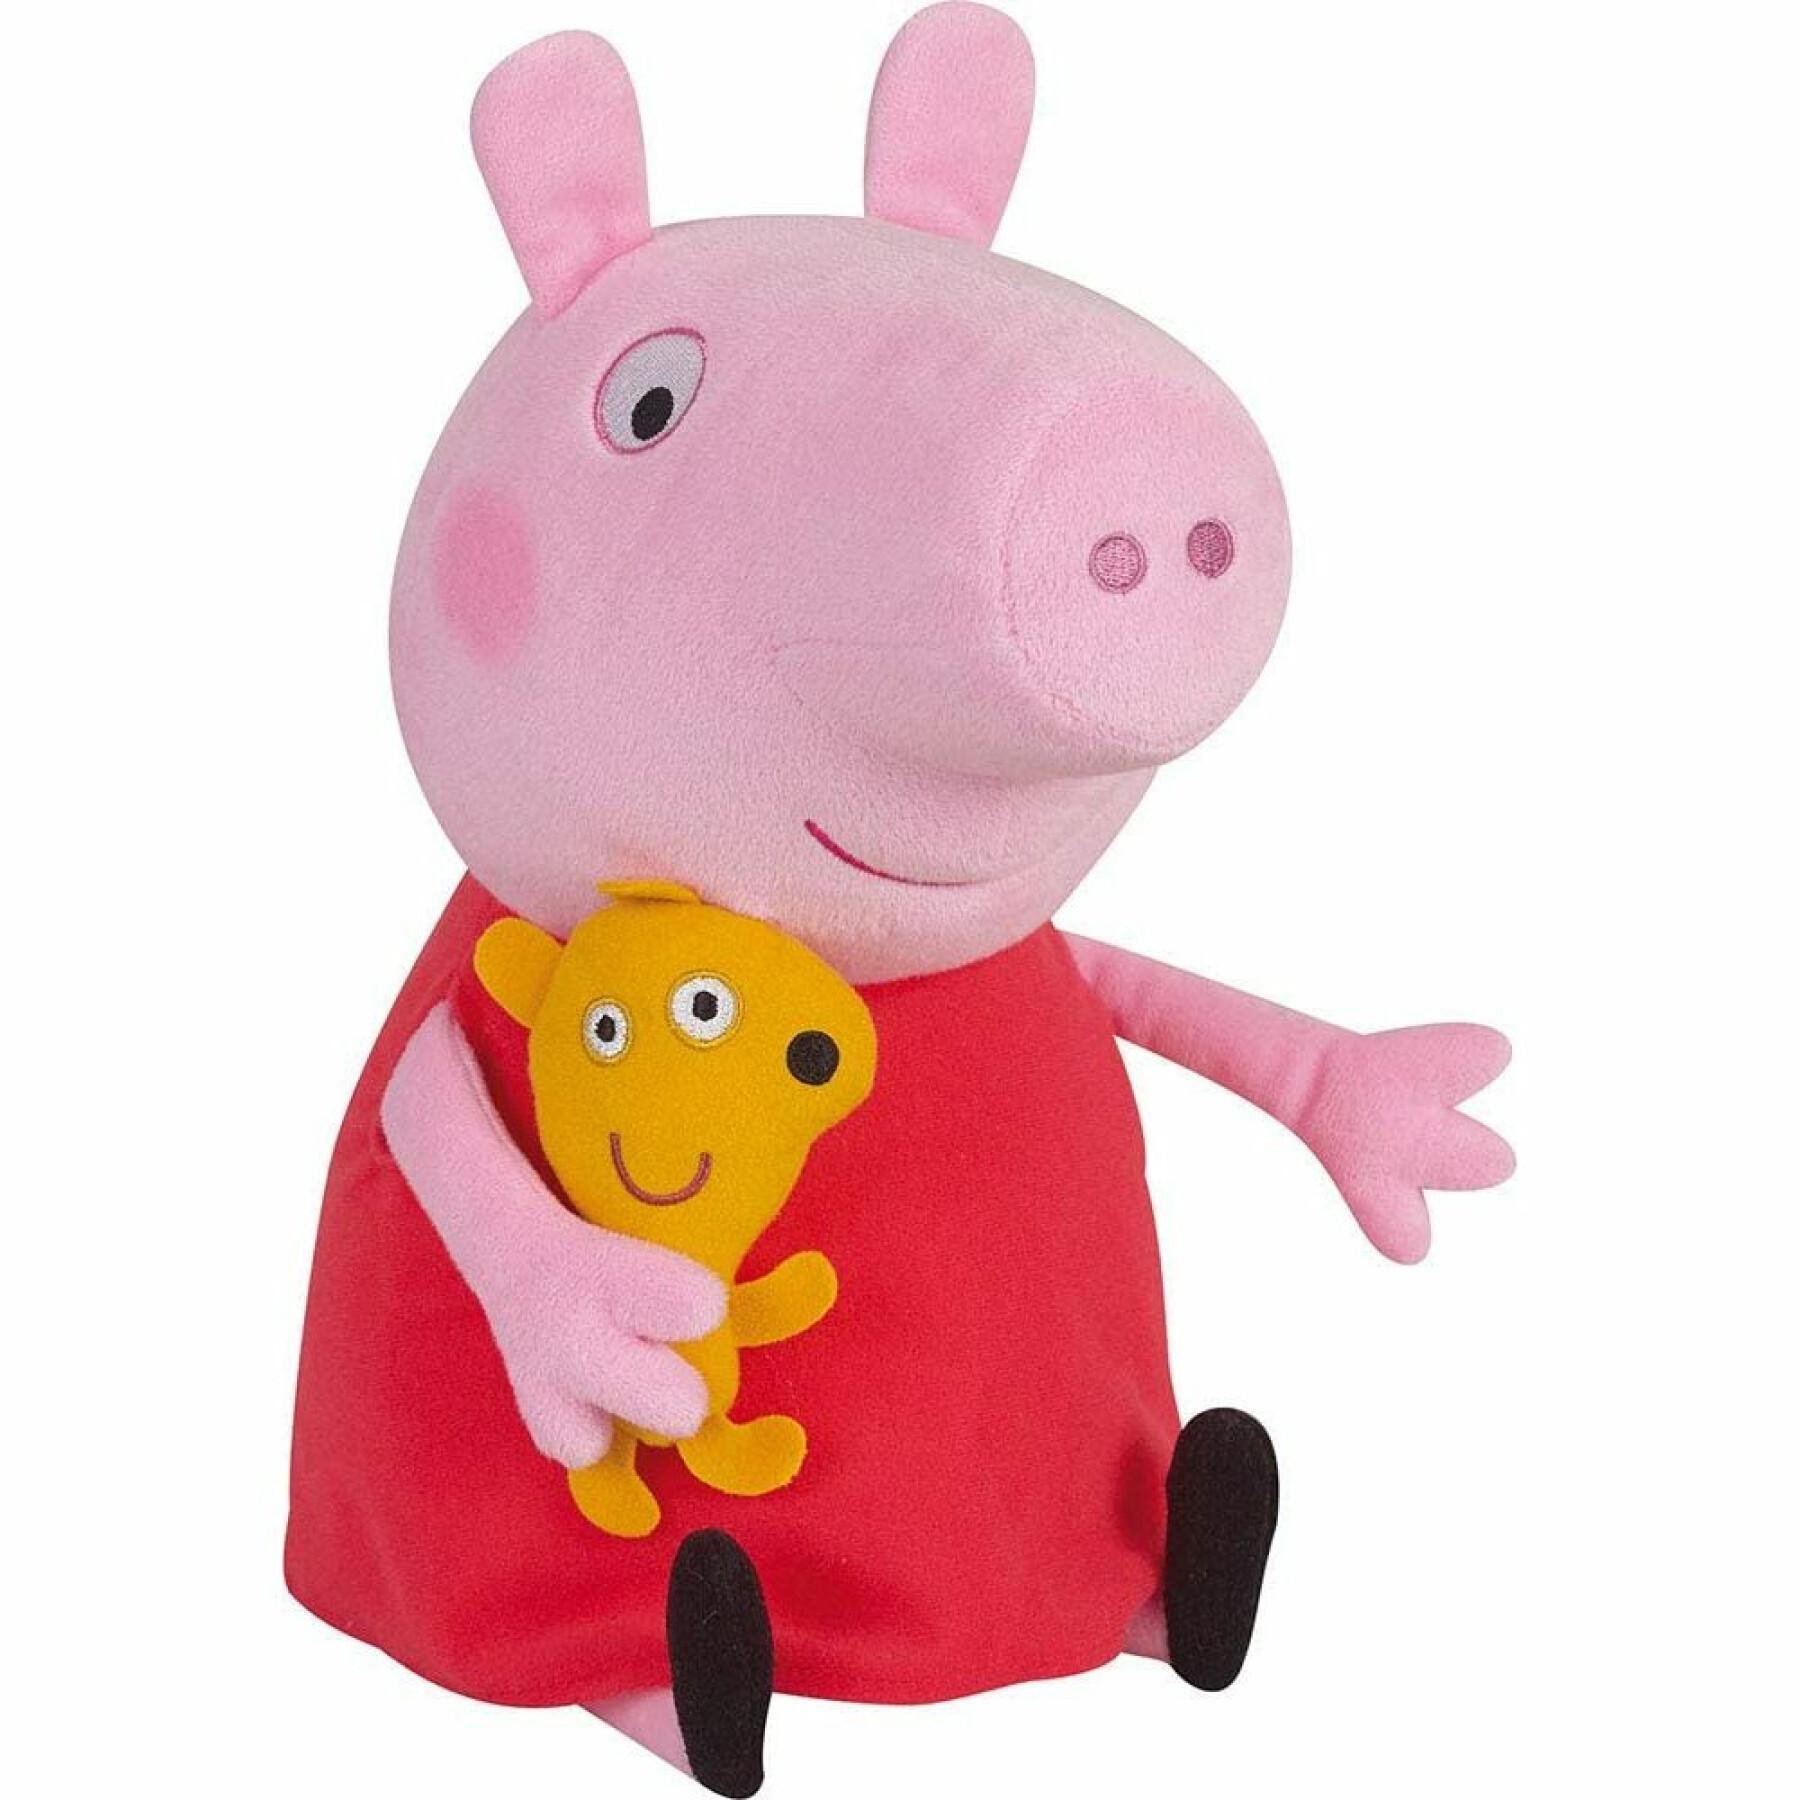 Peluche para niños Jemini Peppa Pig